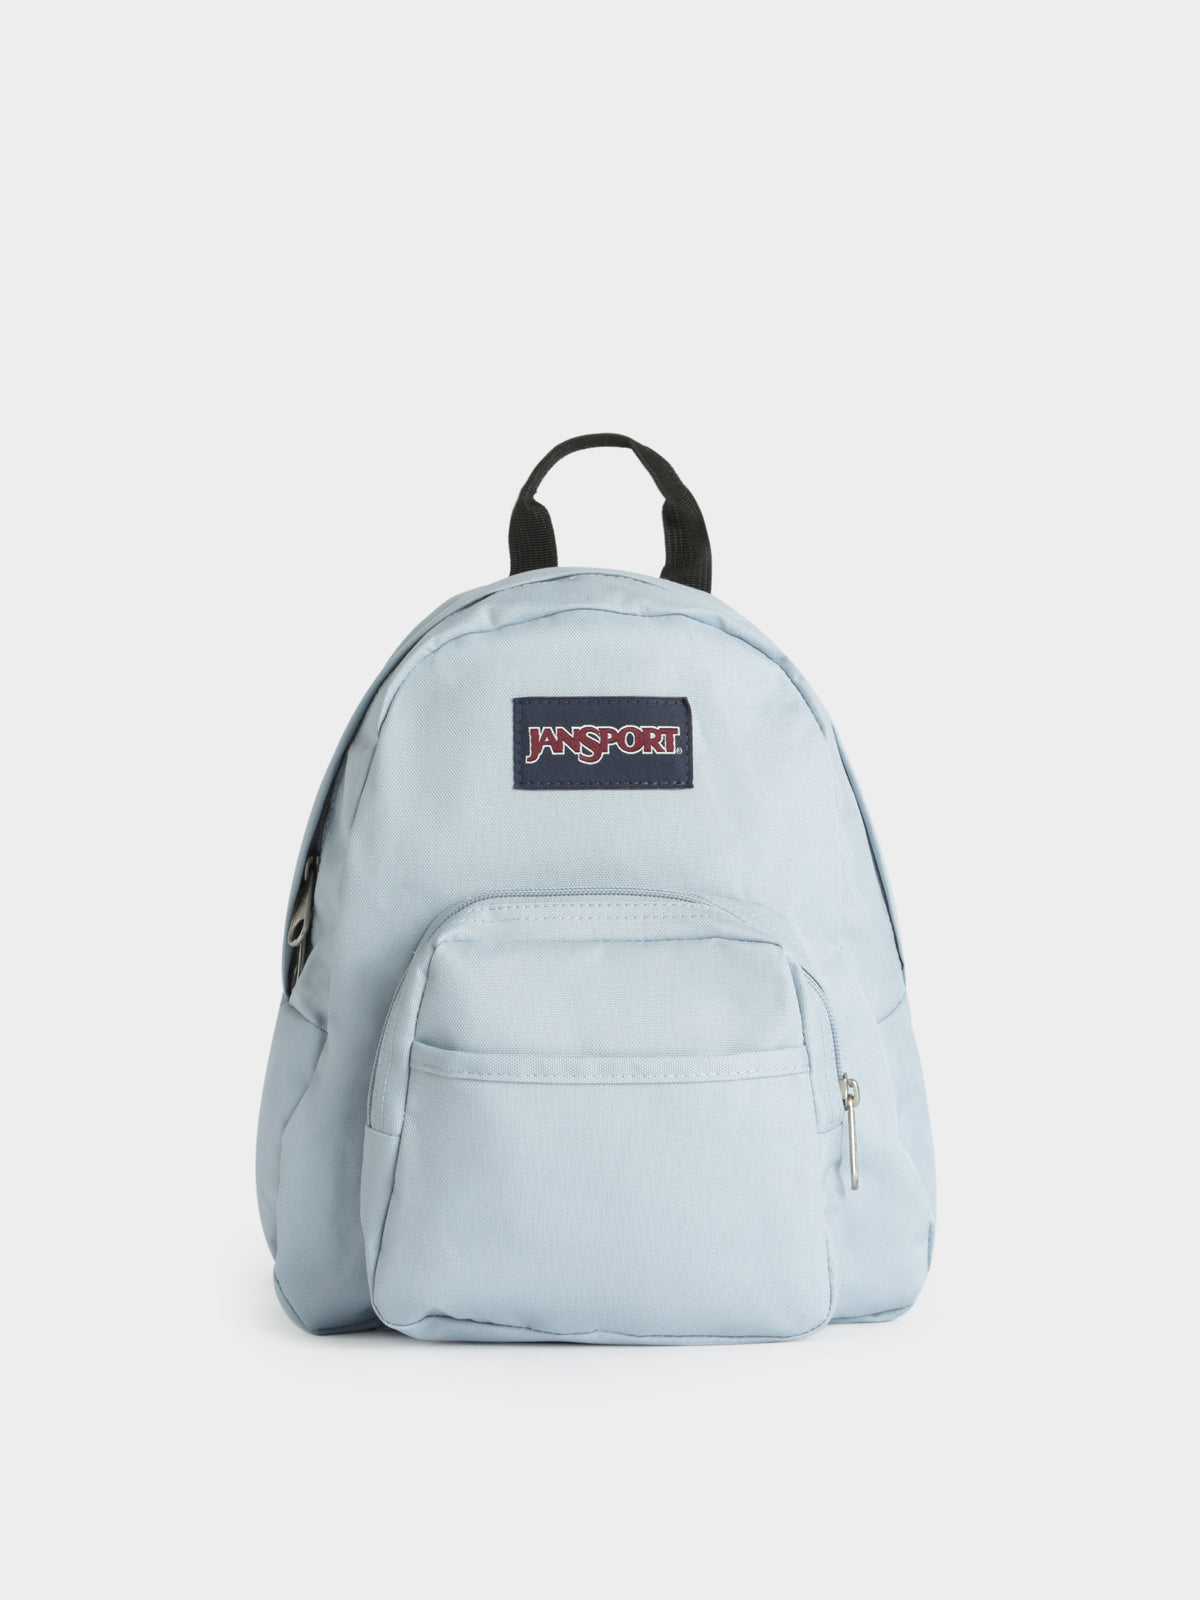 Half Pint Backpack in Blue